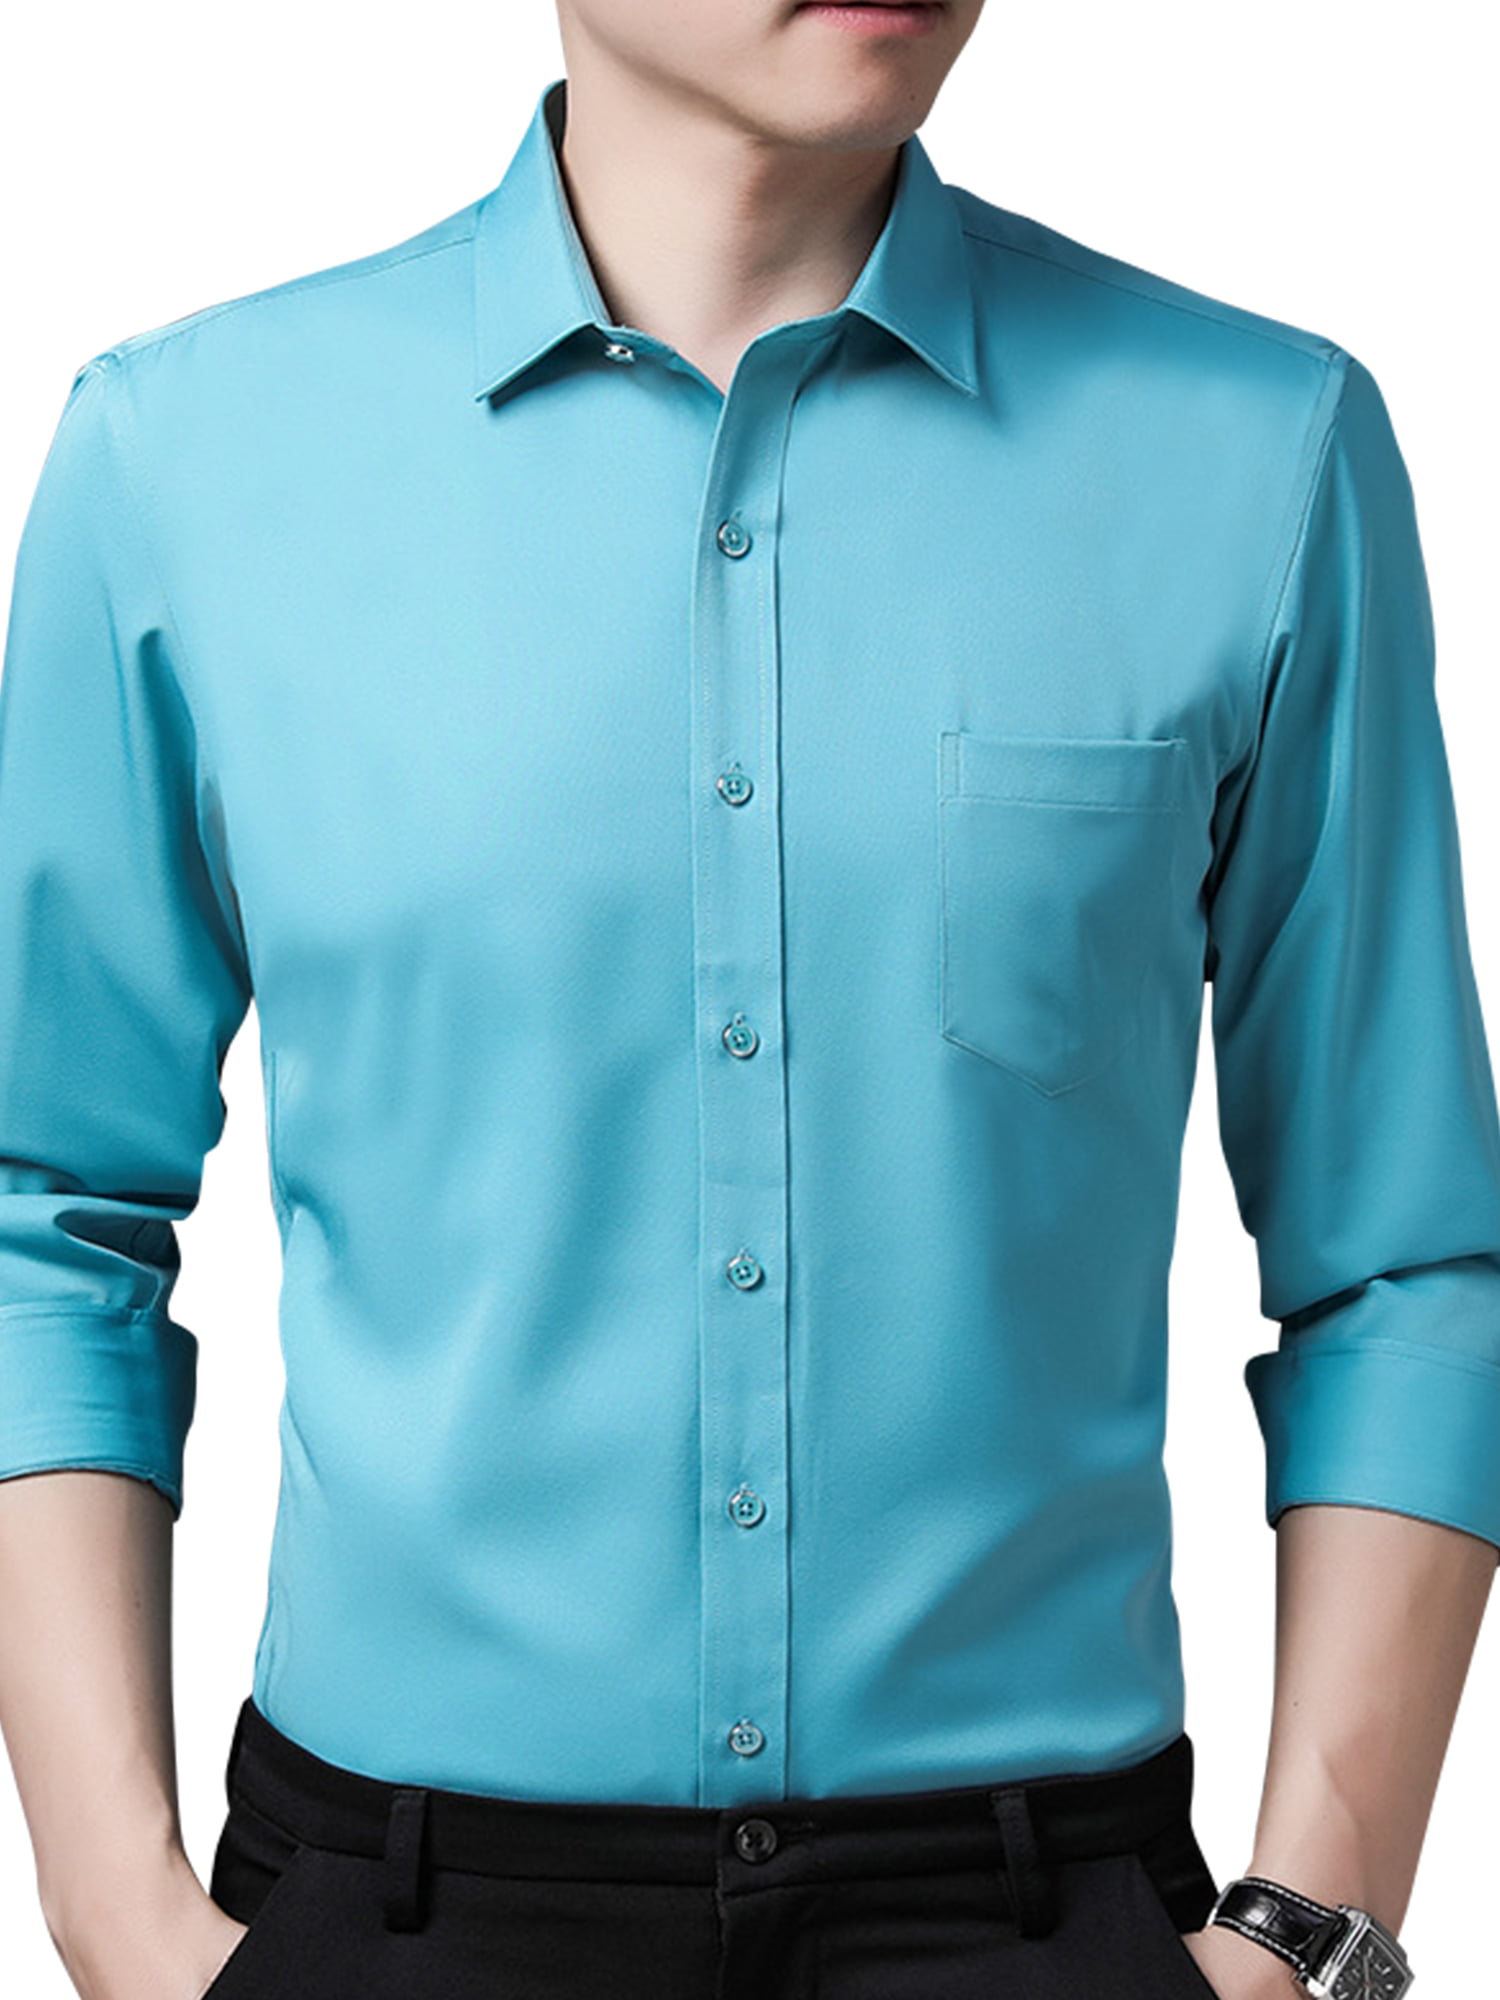 SportsX Mens Slim Casual Irregular Bright Color Long Sleeve Top Shirt